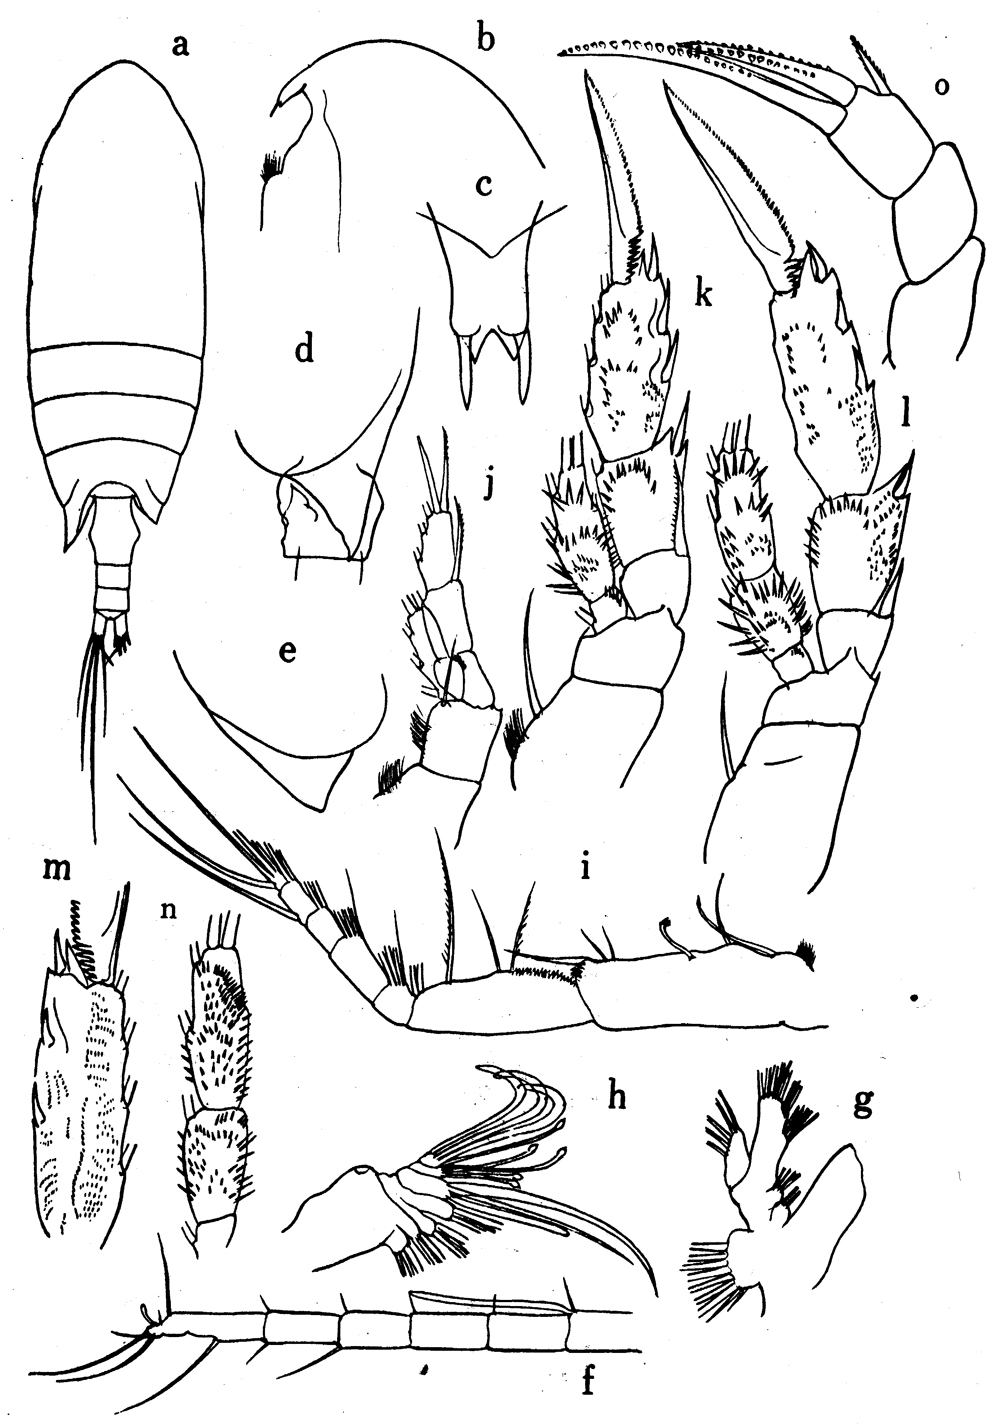 Species Undinothrix spinosa - Plate 1 of morphological figures